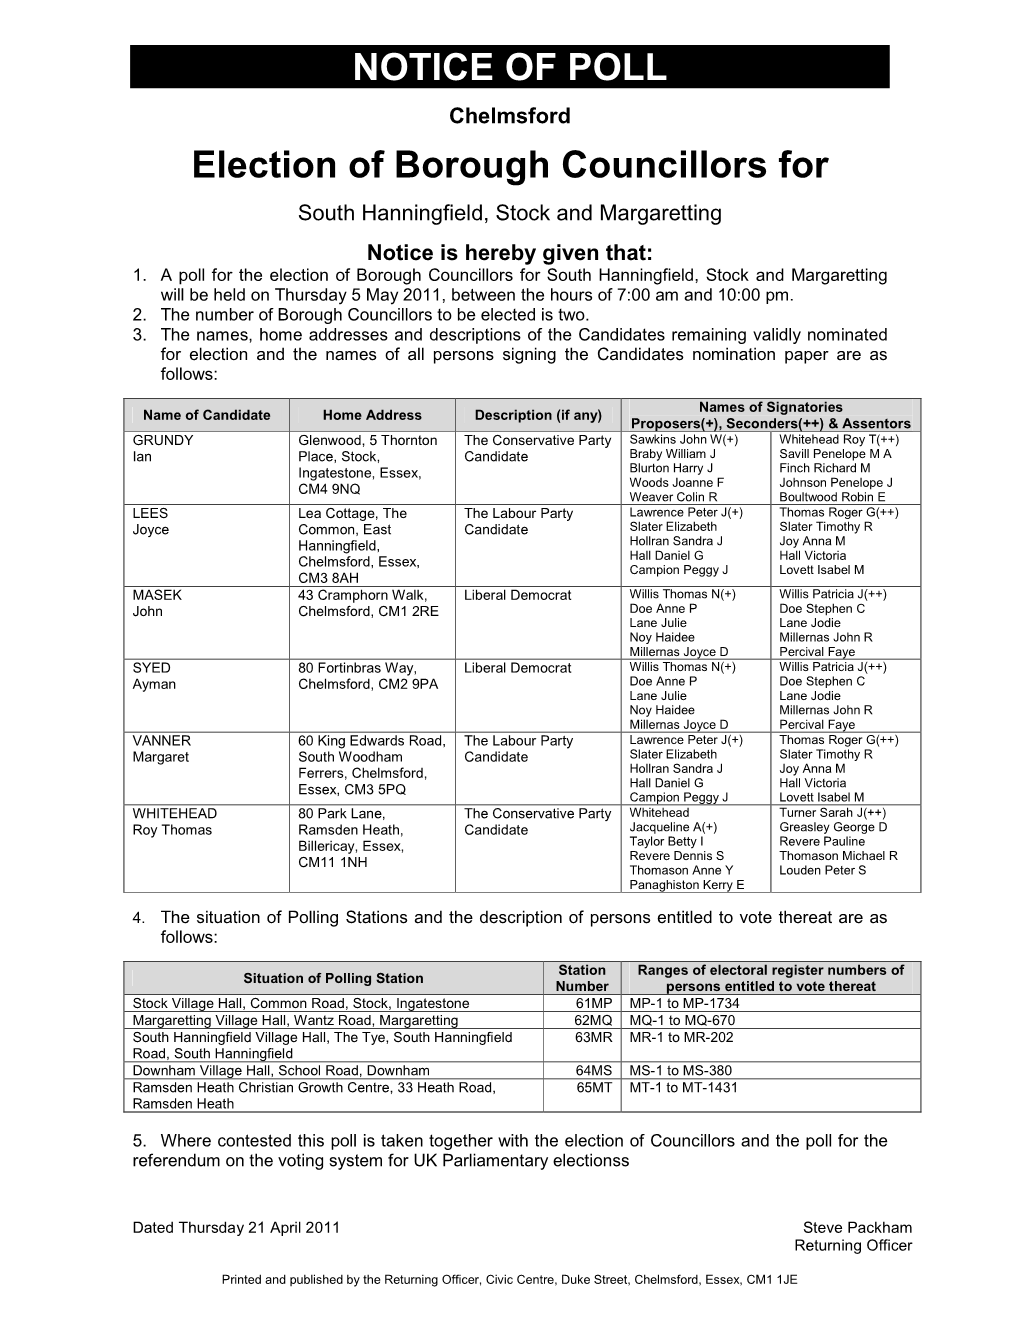 NOTICE of POLL Election of Borough Councillors